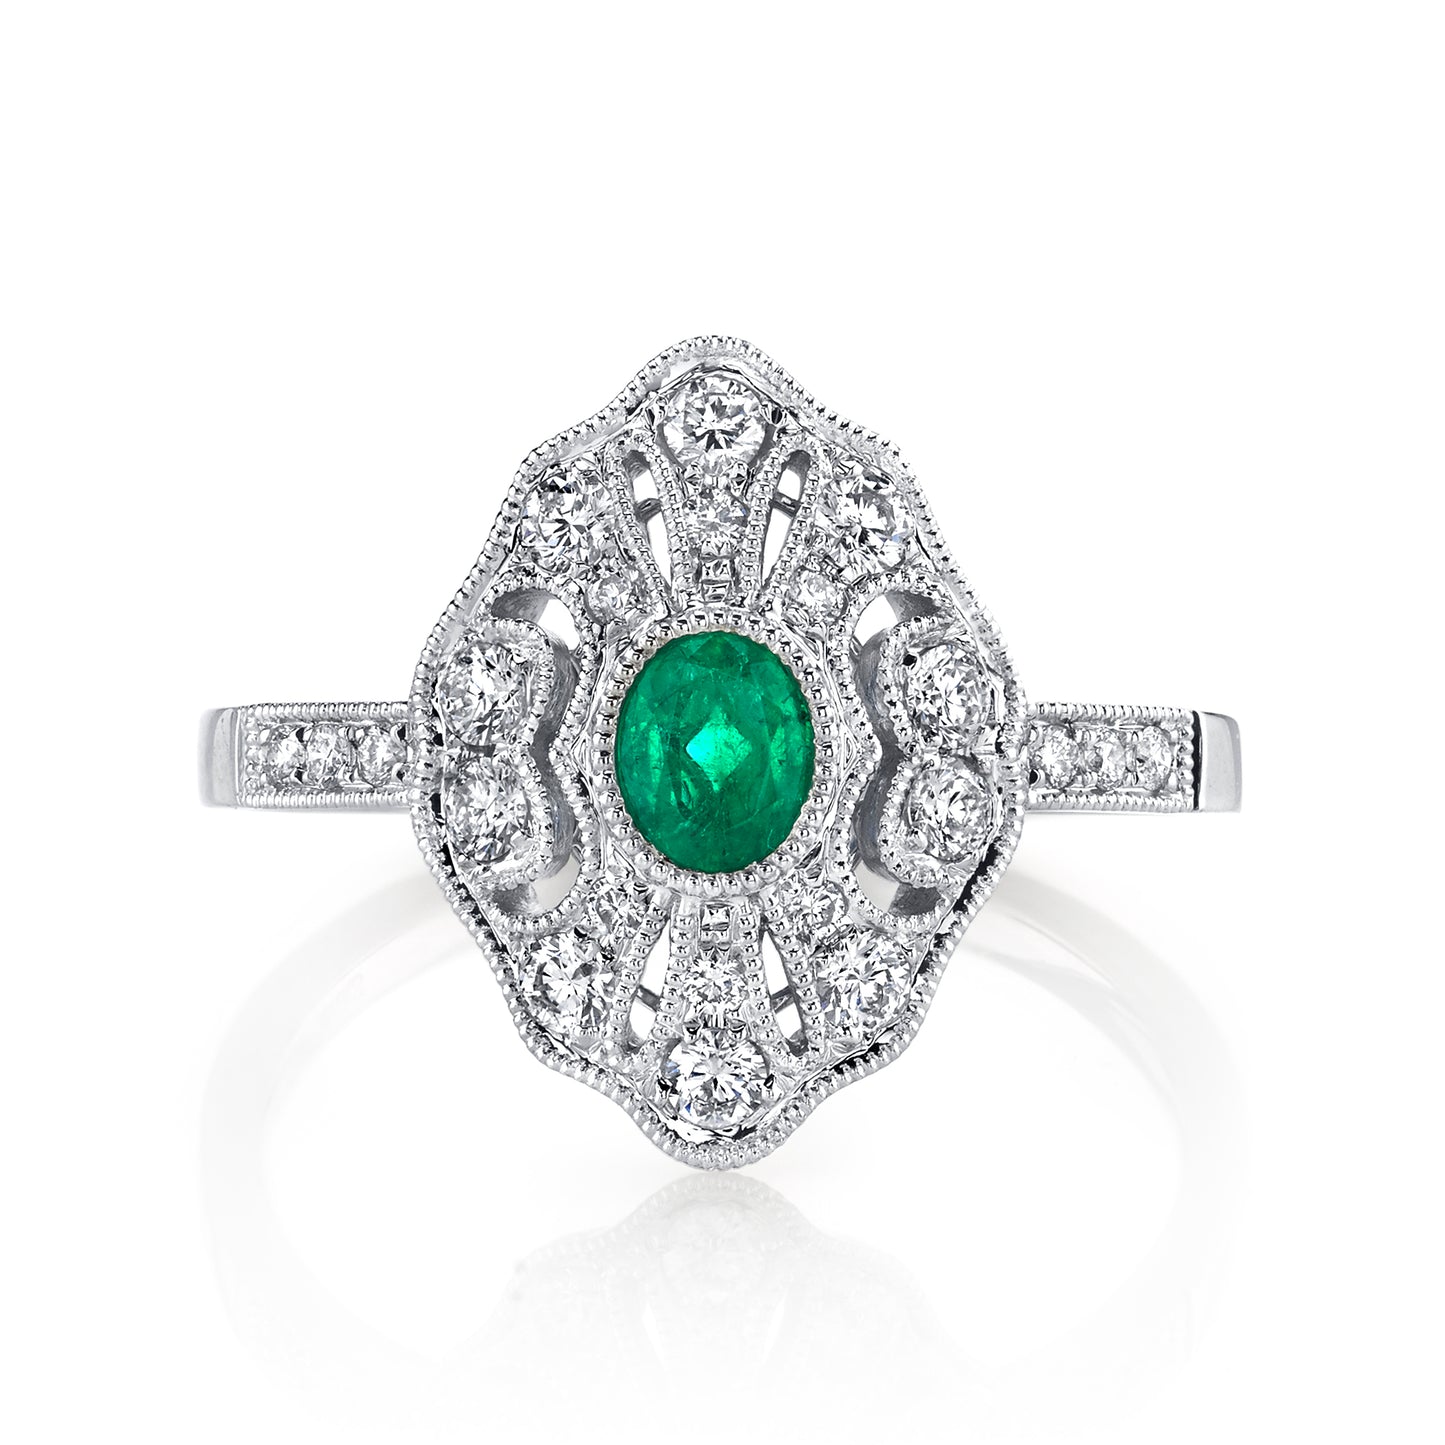 0.24 CRT Round Emerald with Diamonds Band